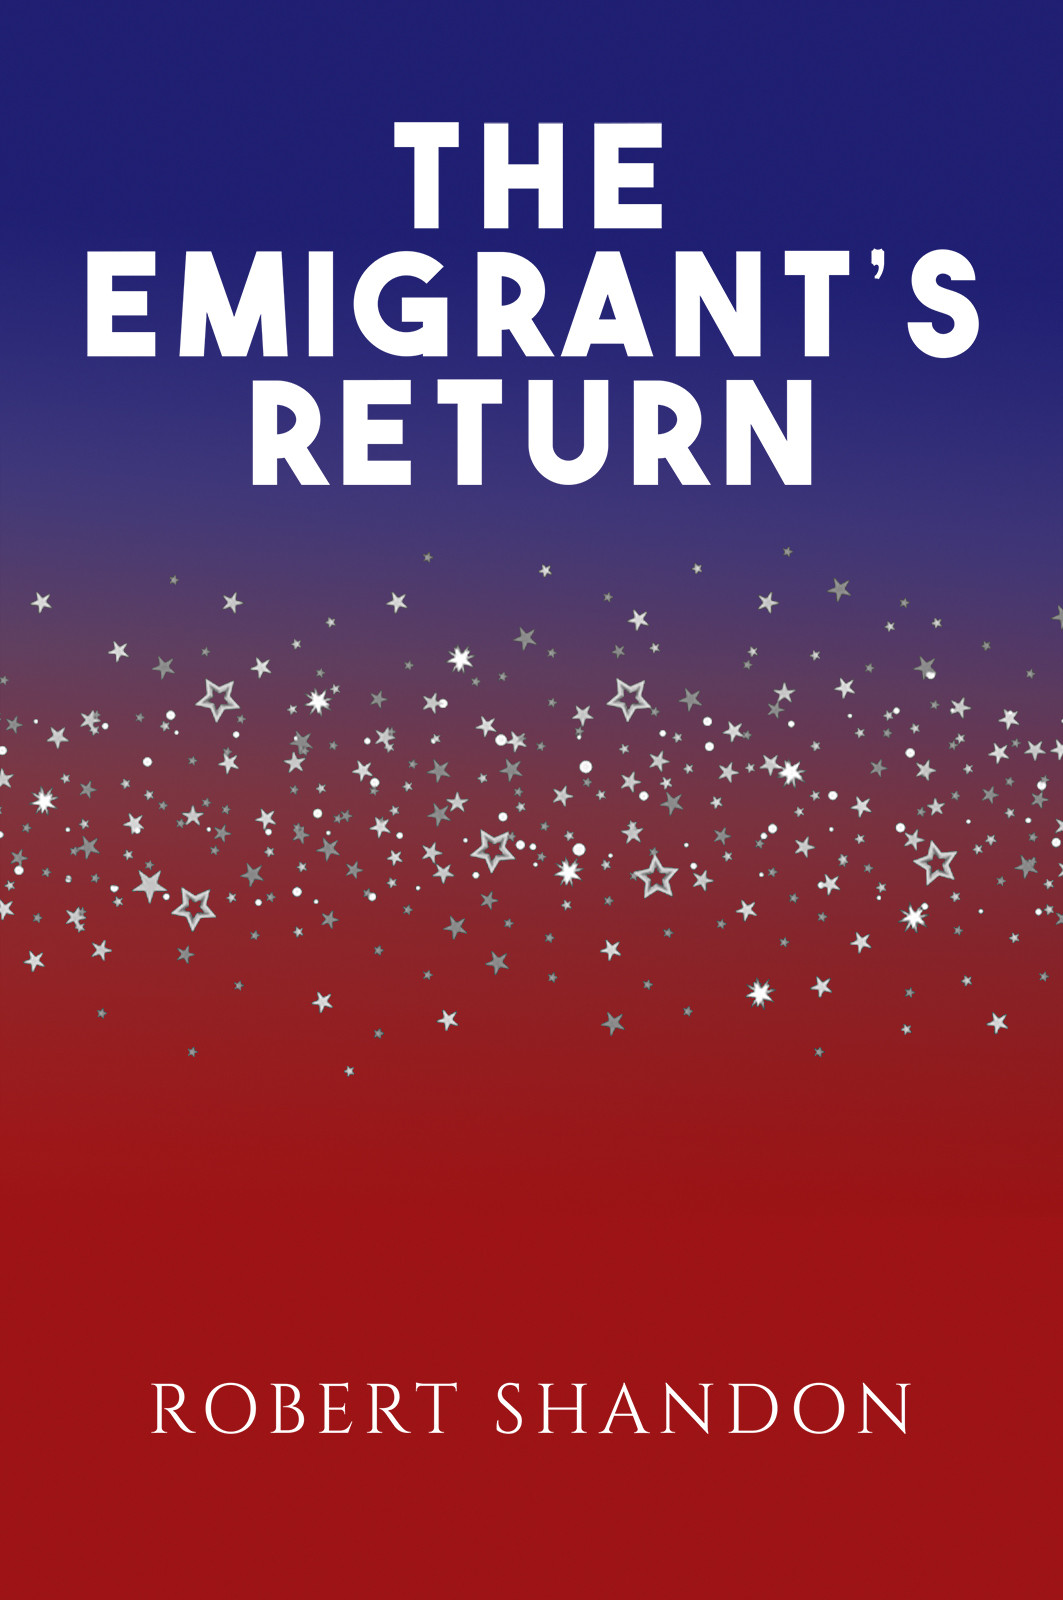 The Emigrant’s Return